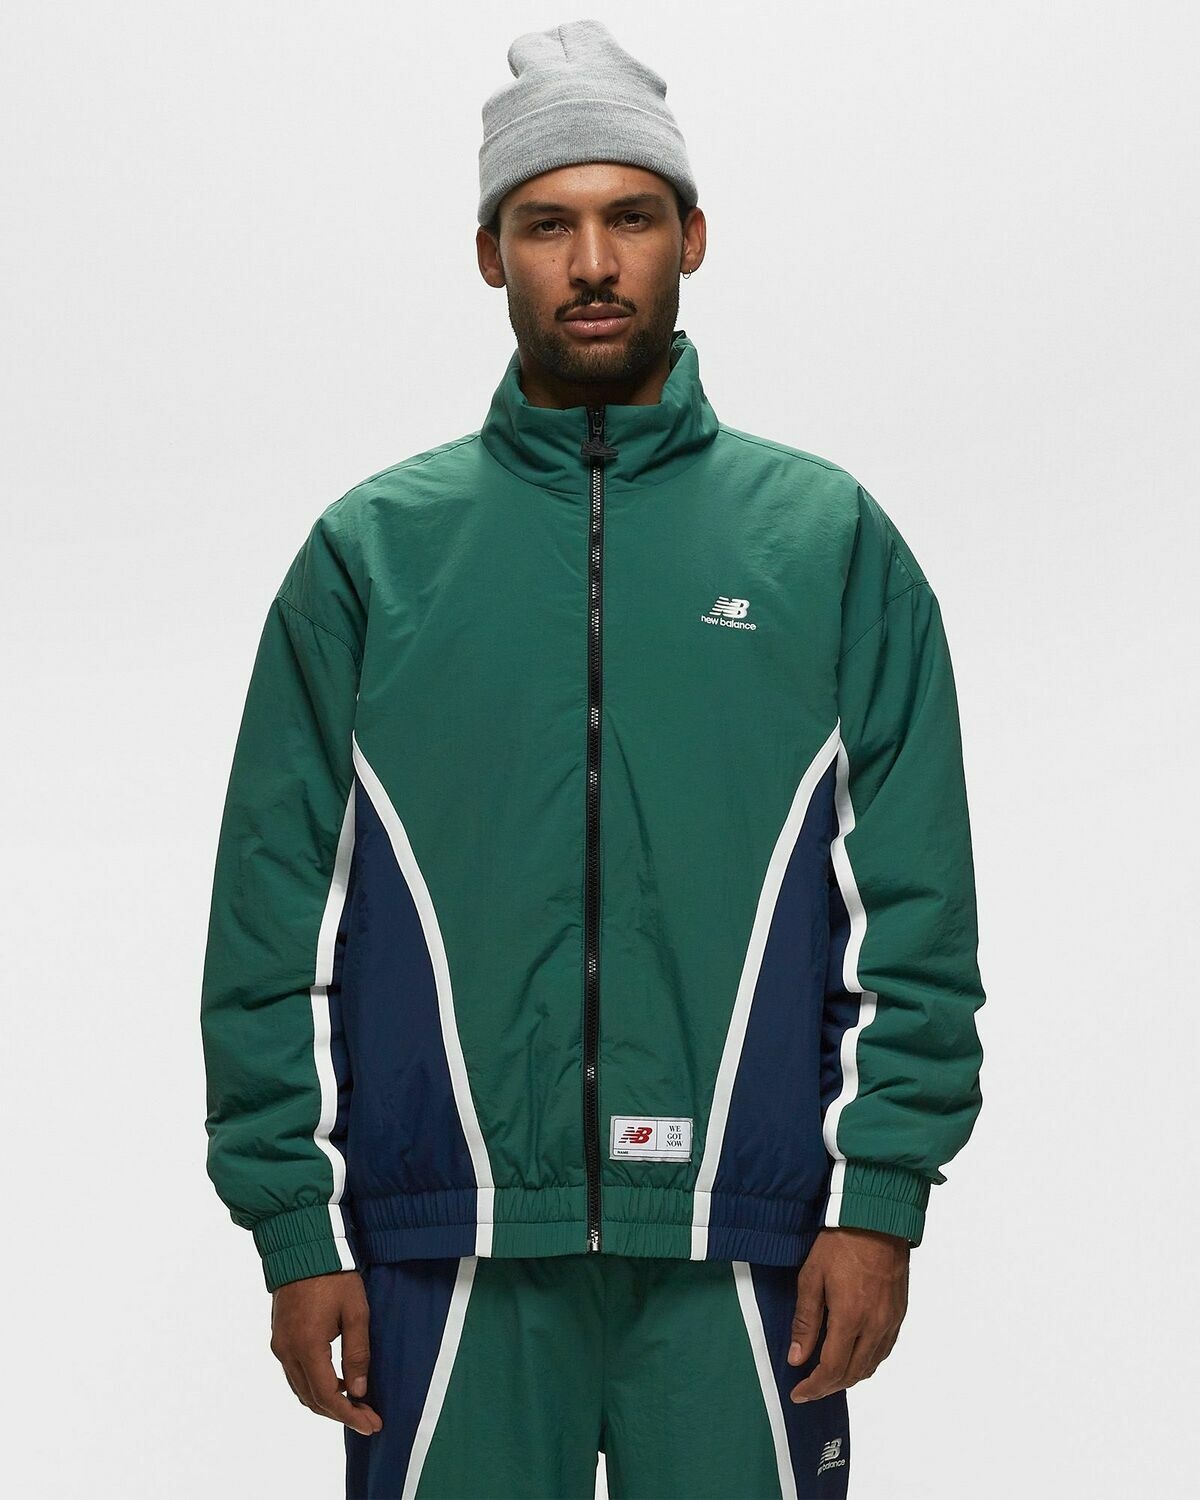 Dolce & Gabbana Men's Check Track Jacket - Green - Casual Jackets